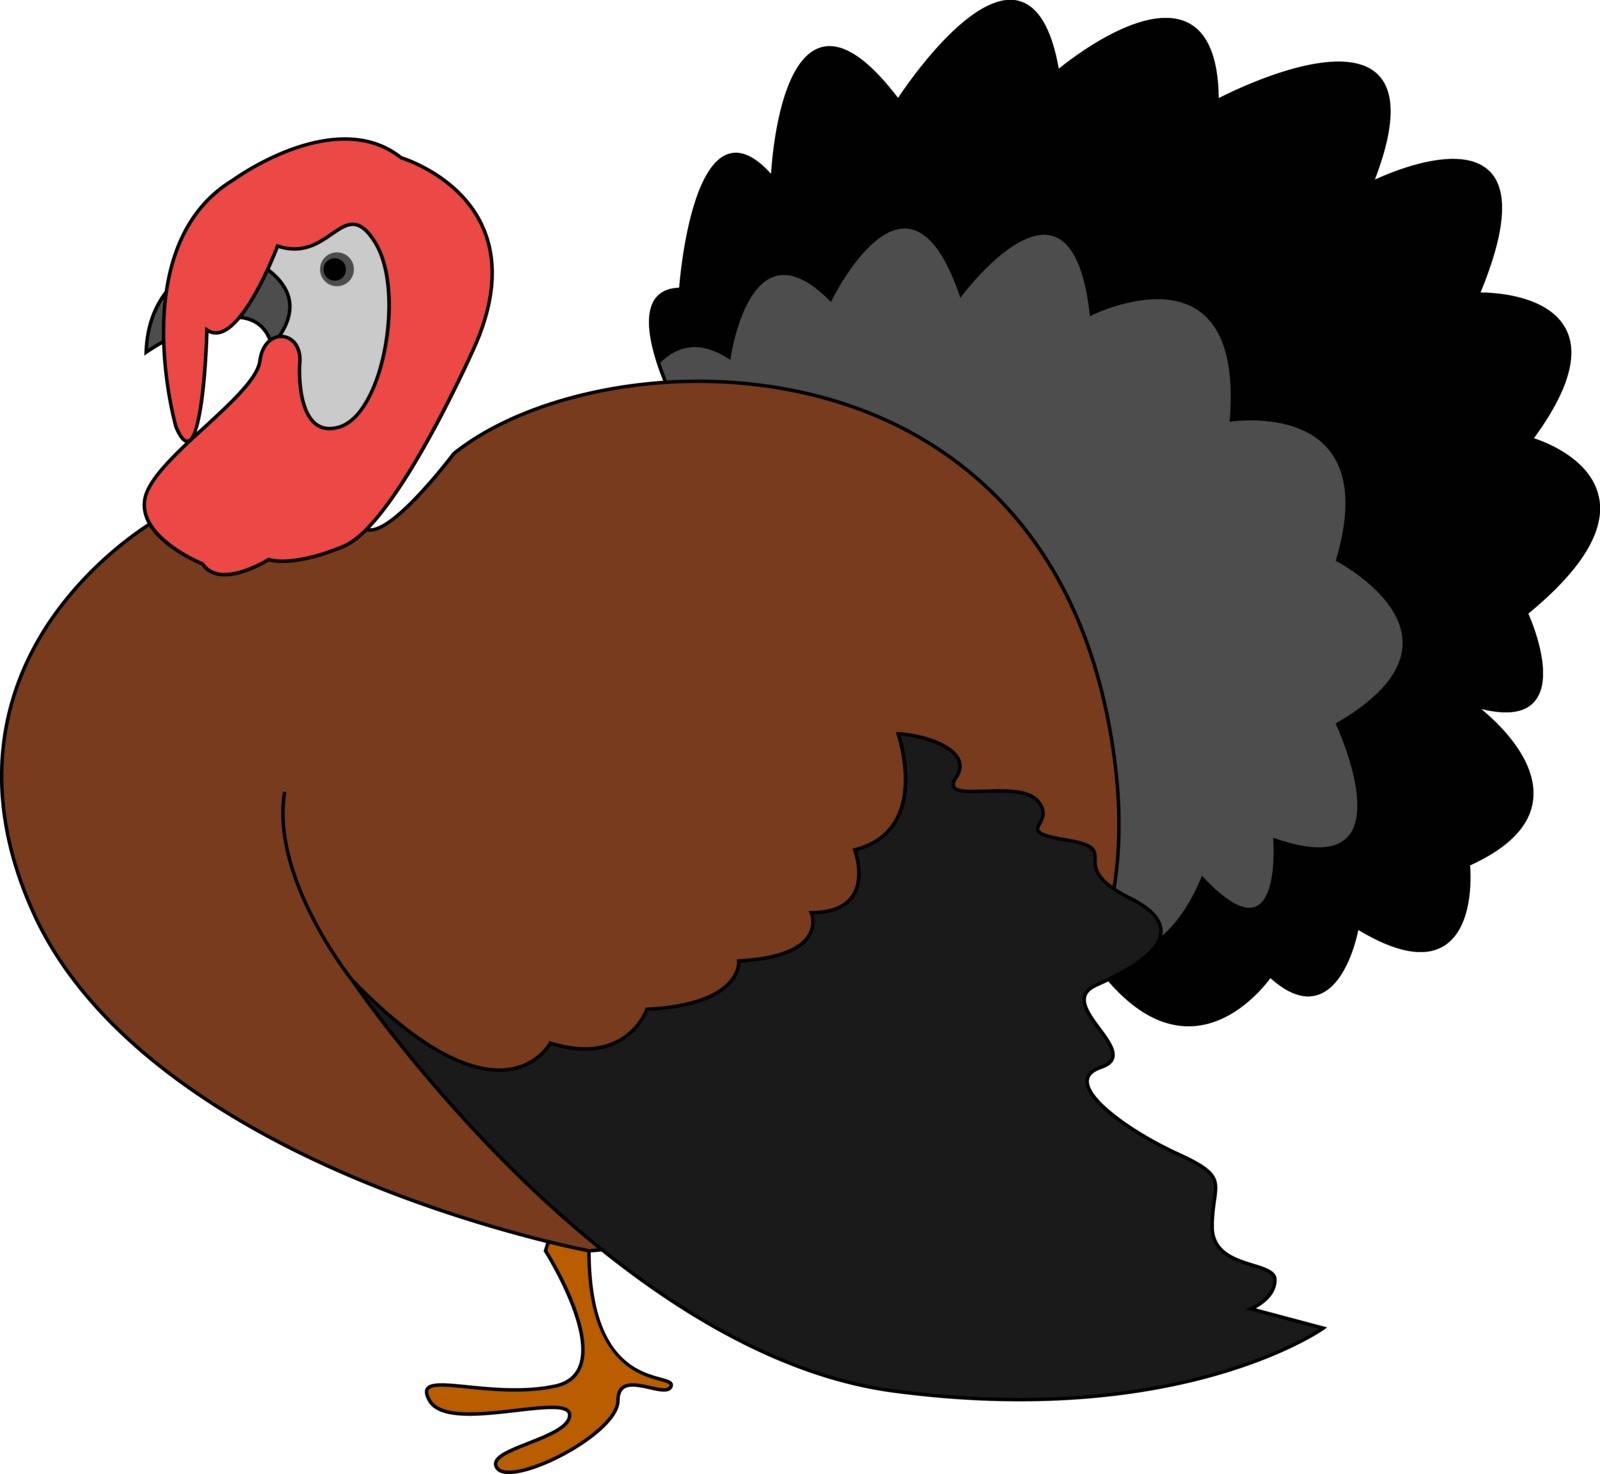 Big fat turkey, illustration, vector on white background.